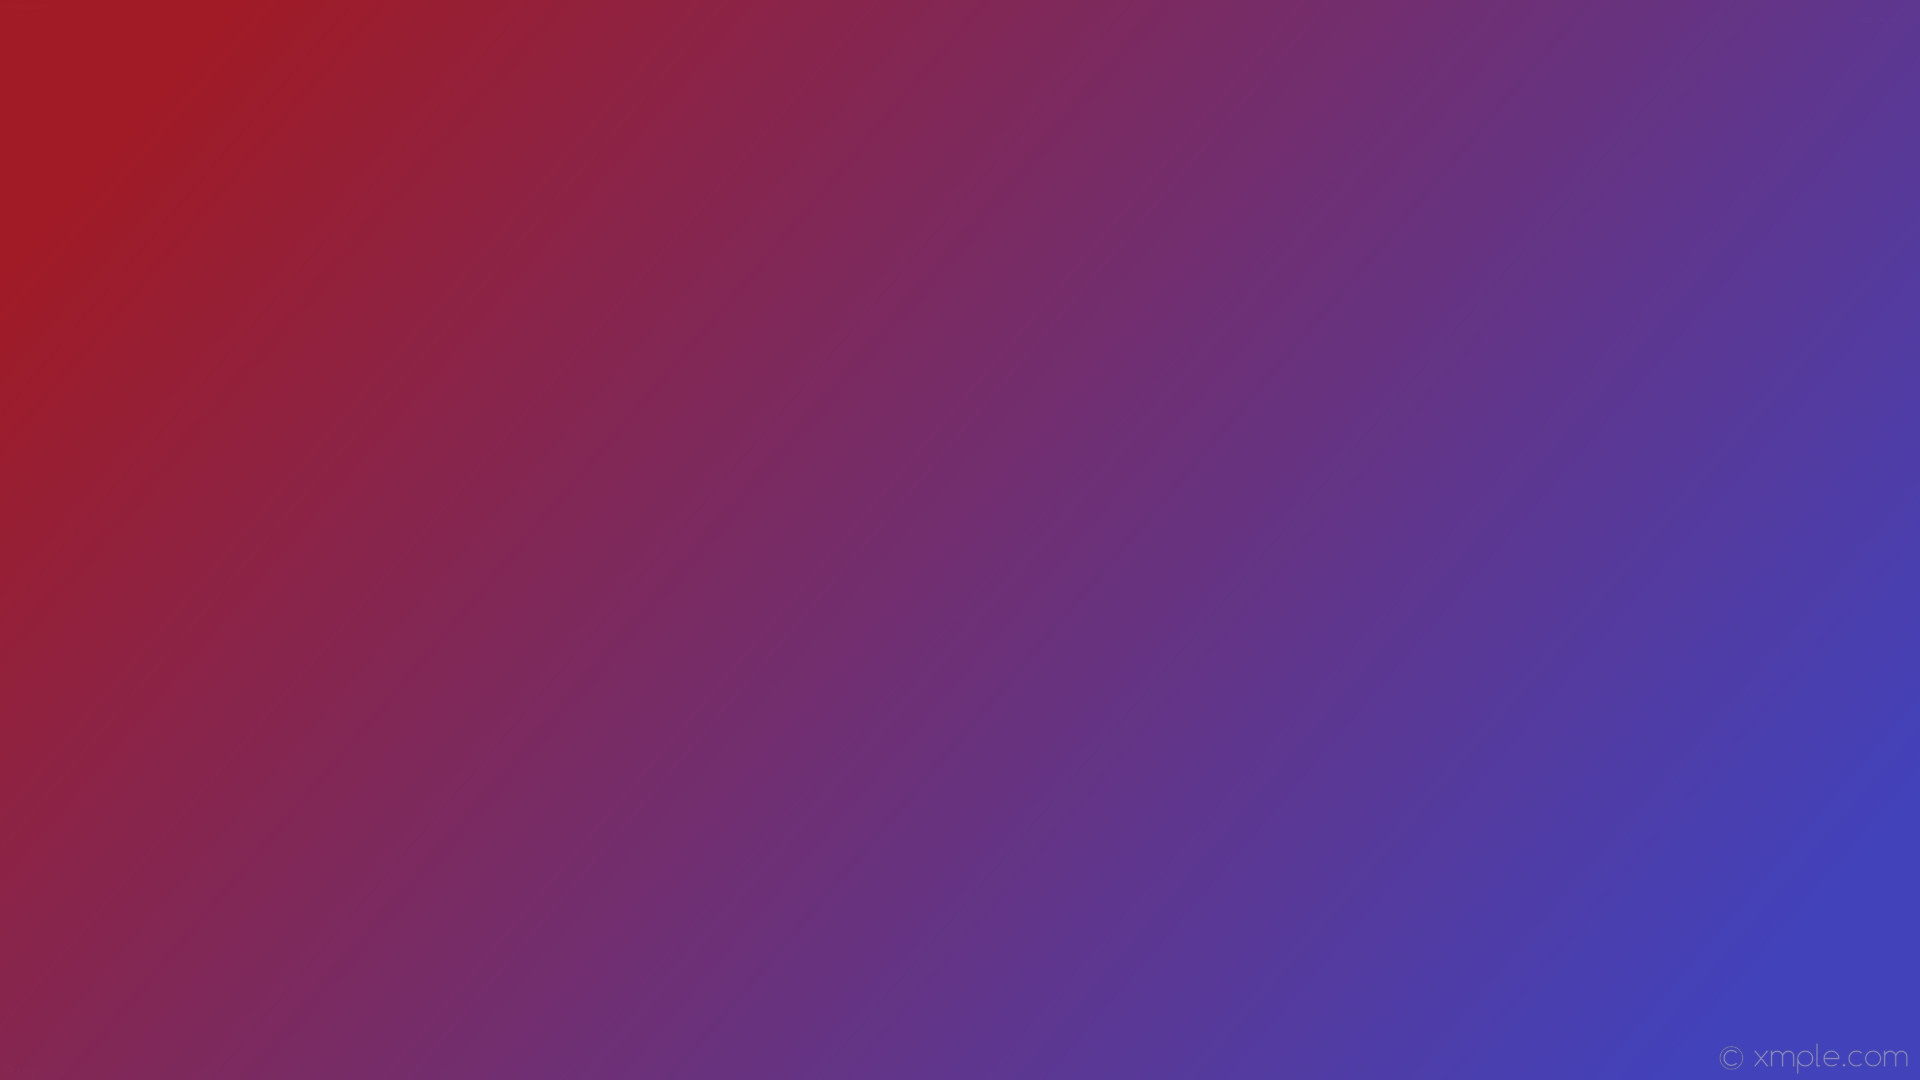 wallpaper red blue linear gradient #a01b26 #4242bb 165Â°